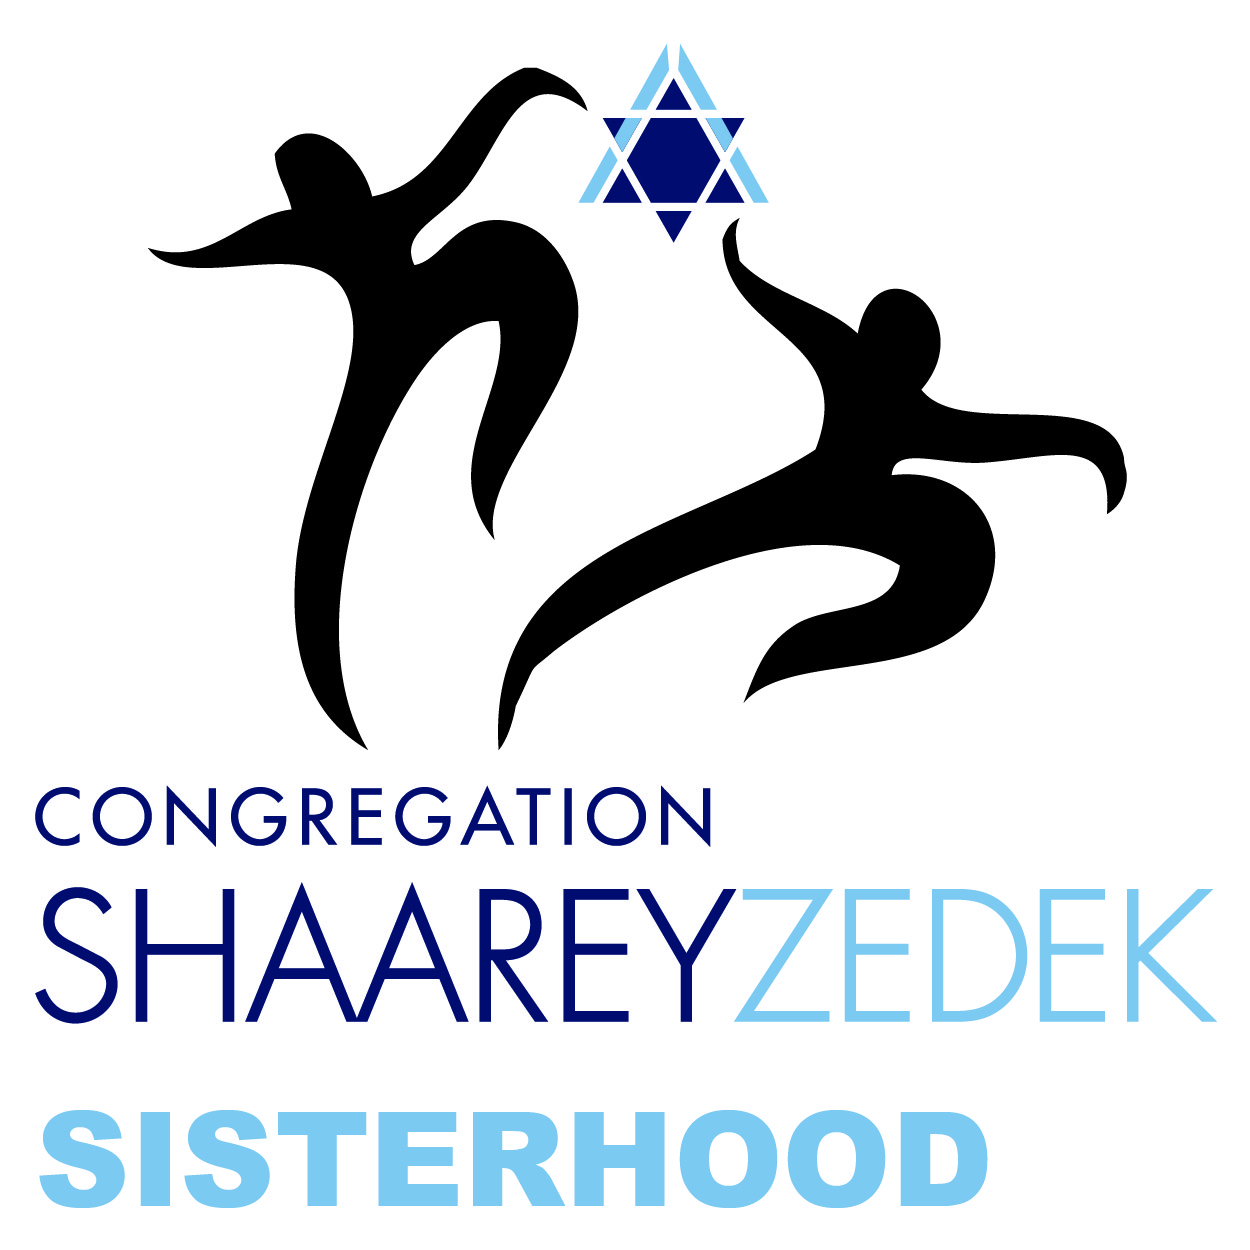 Sisterhood Shabbat Morning Services